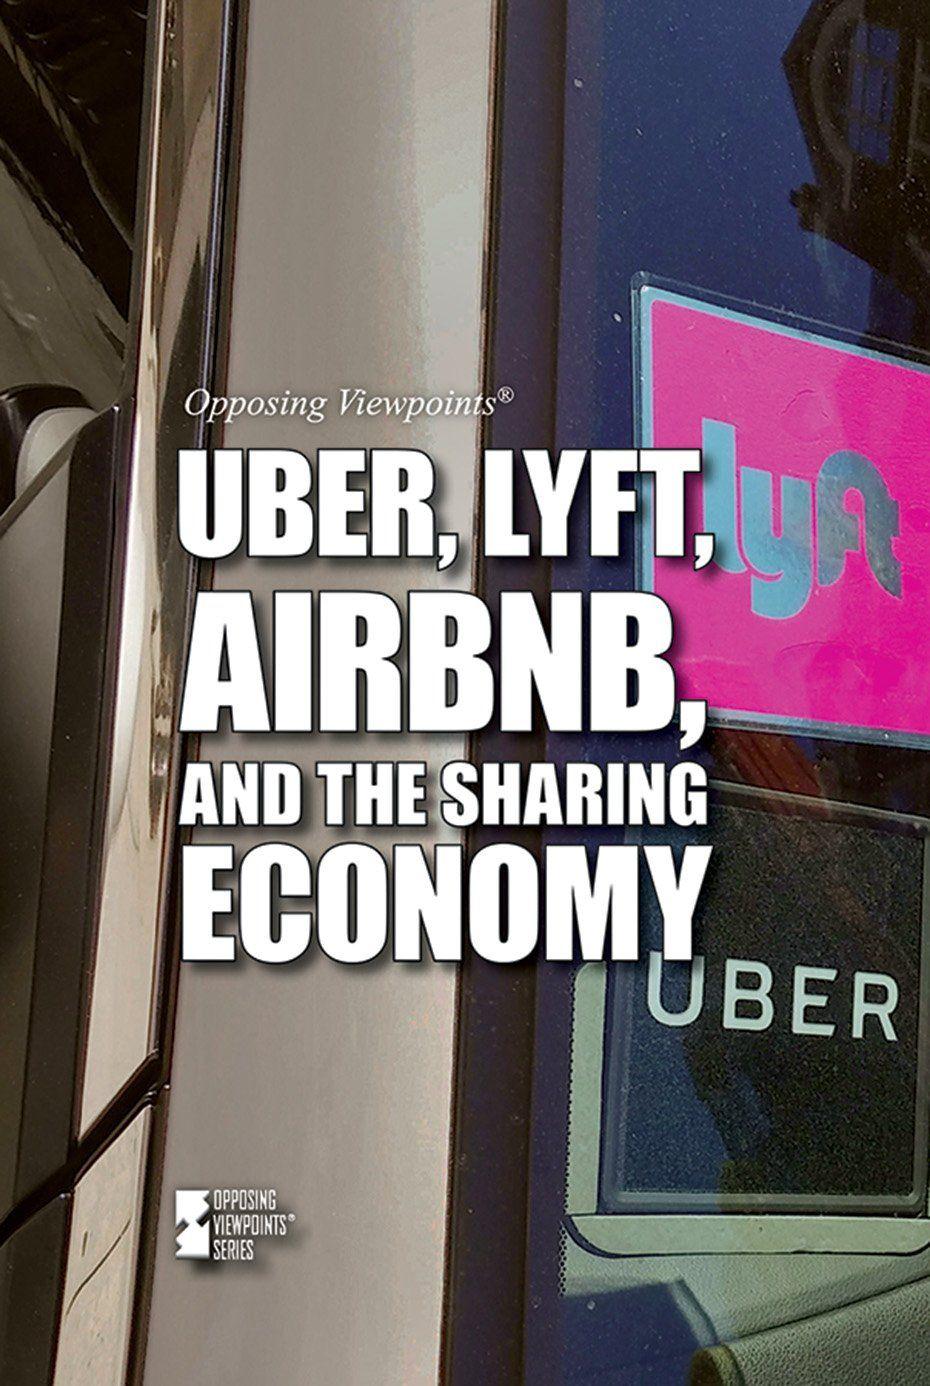 Sharing Economy Uber Lyft Logo - Amazon.com: Uber, Lyft, Airbnb, and the Sharing Economy (Opposing ...